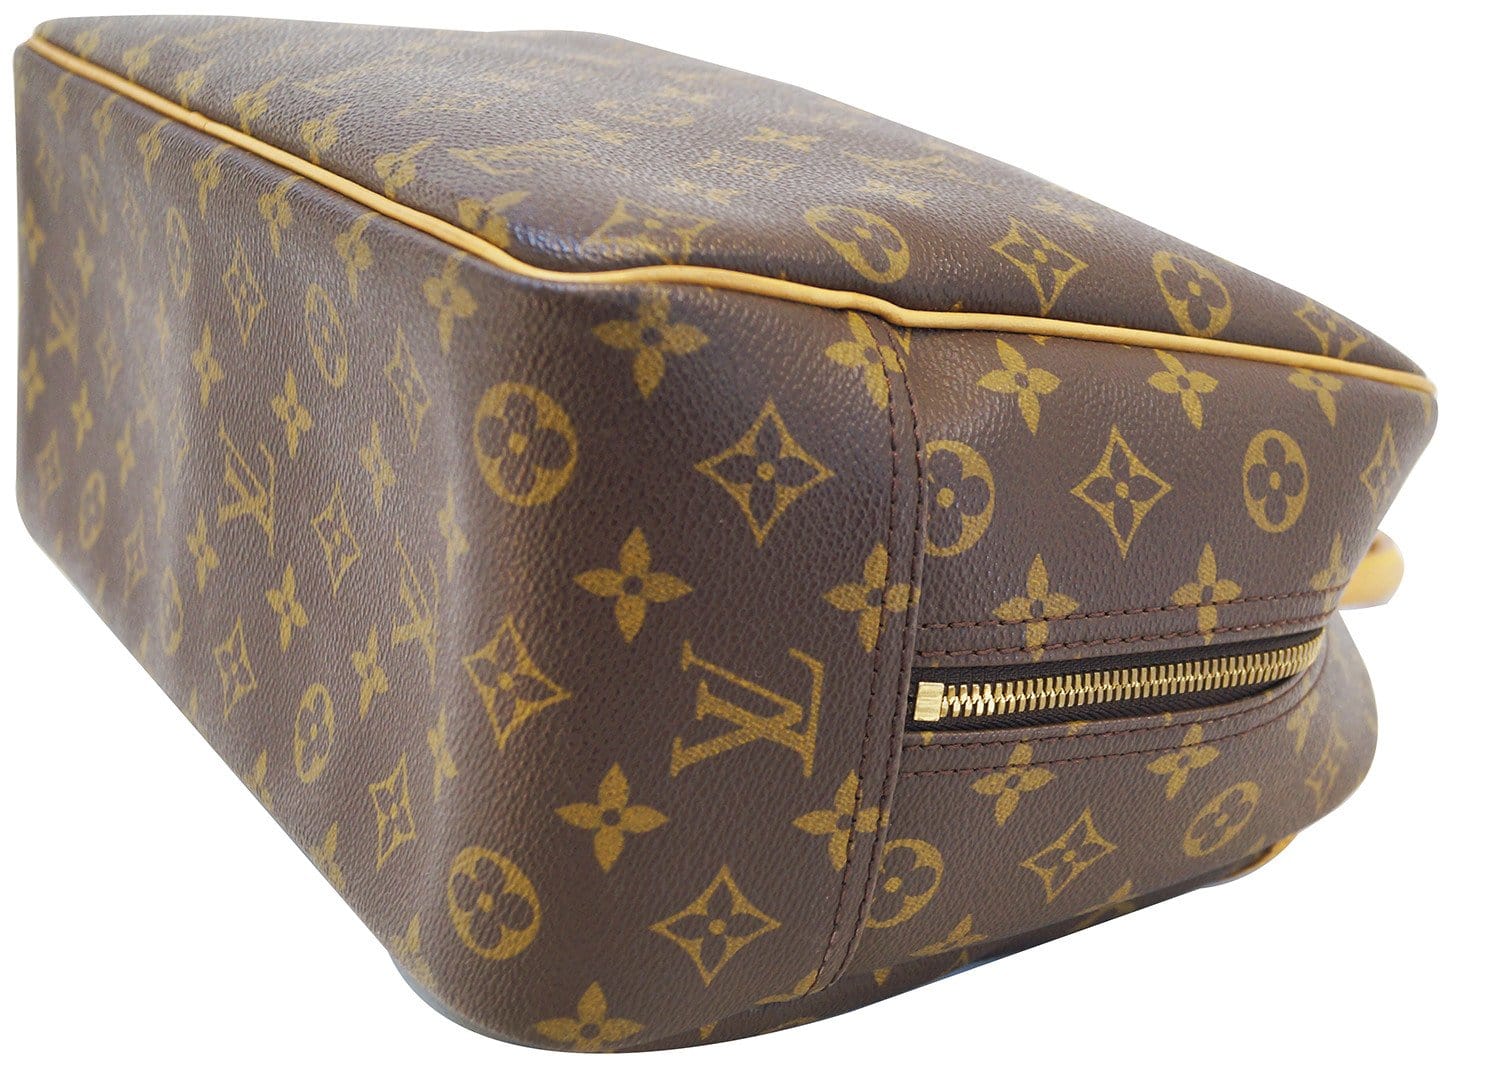 Louis Vuitton Deauville Monogram M47270 - Tabita Bags – Tabita